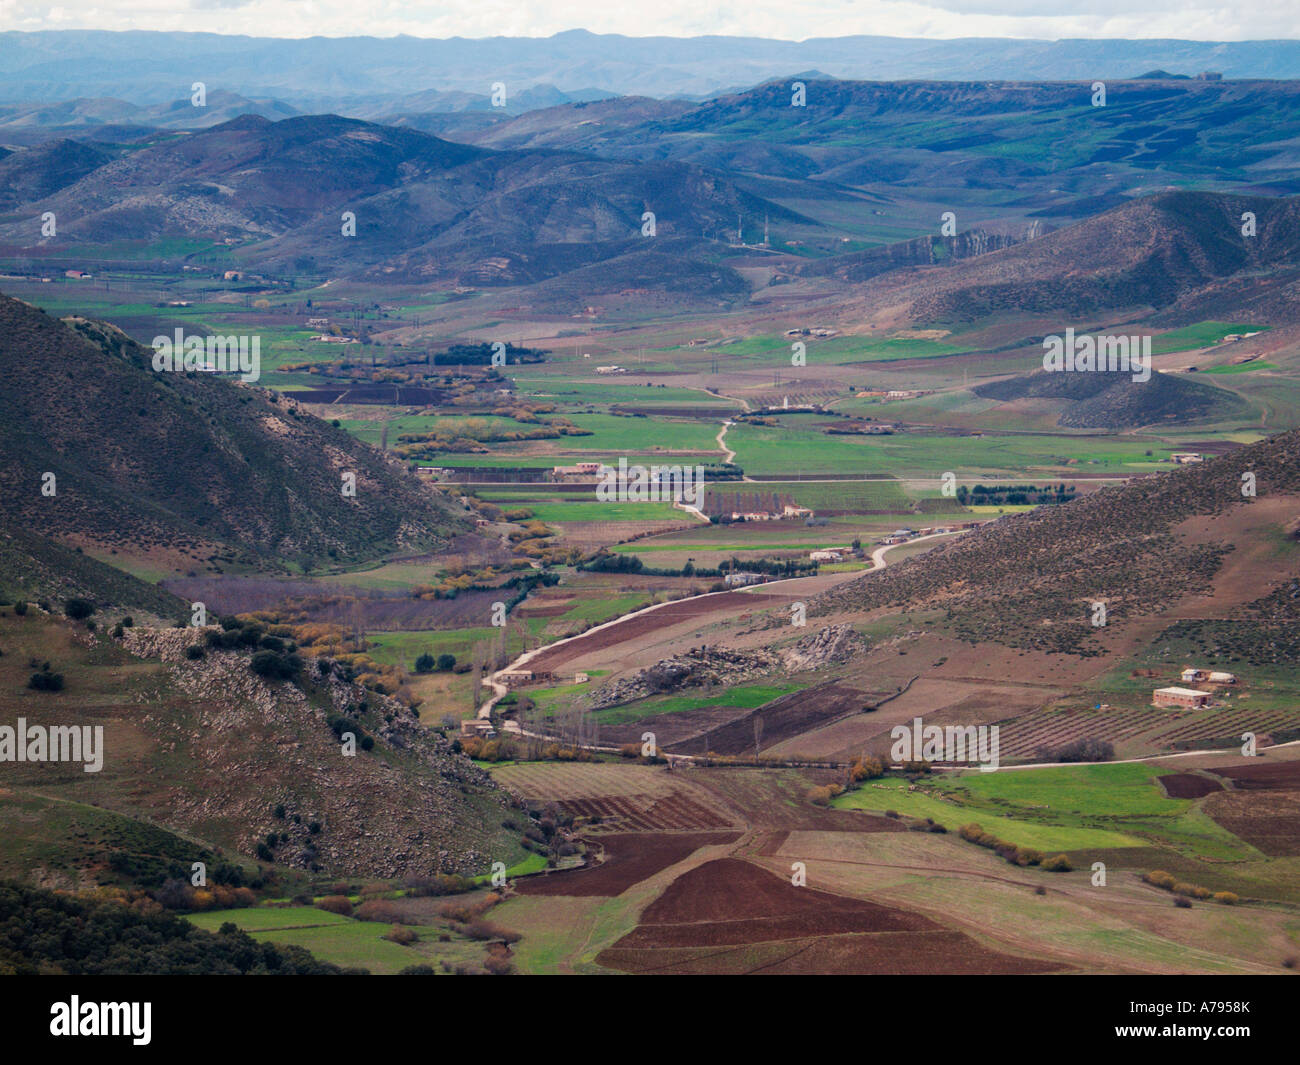 View from the Middle Atlas mountain range, near Azrou, Morocco Stock Photo